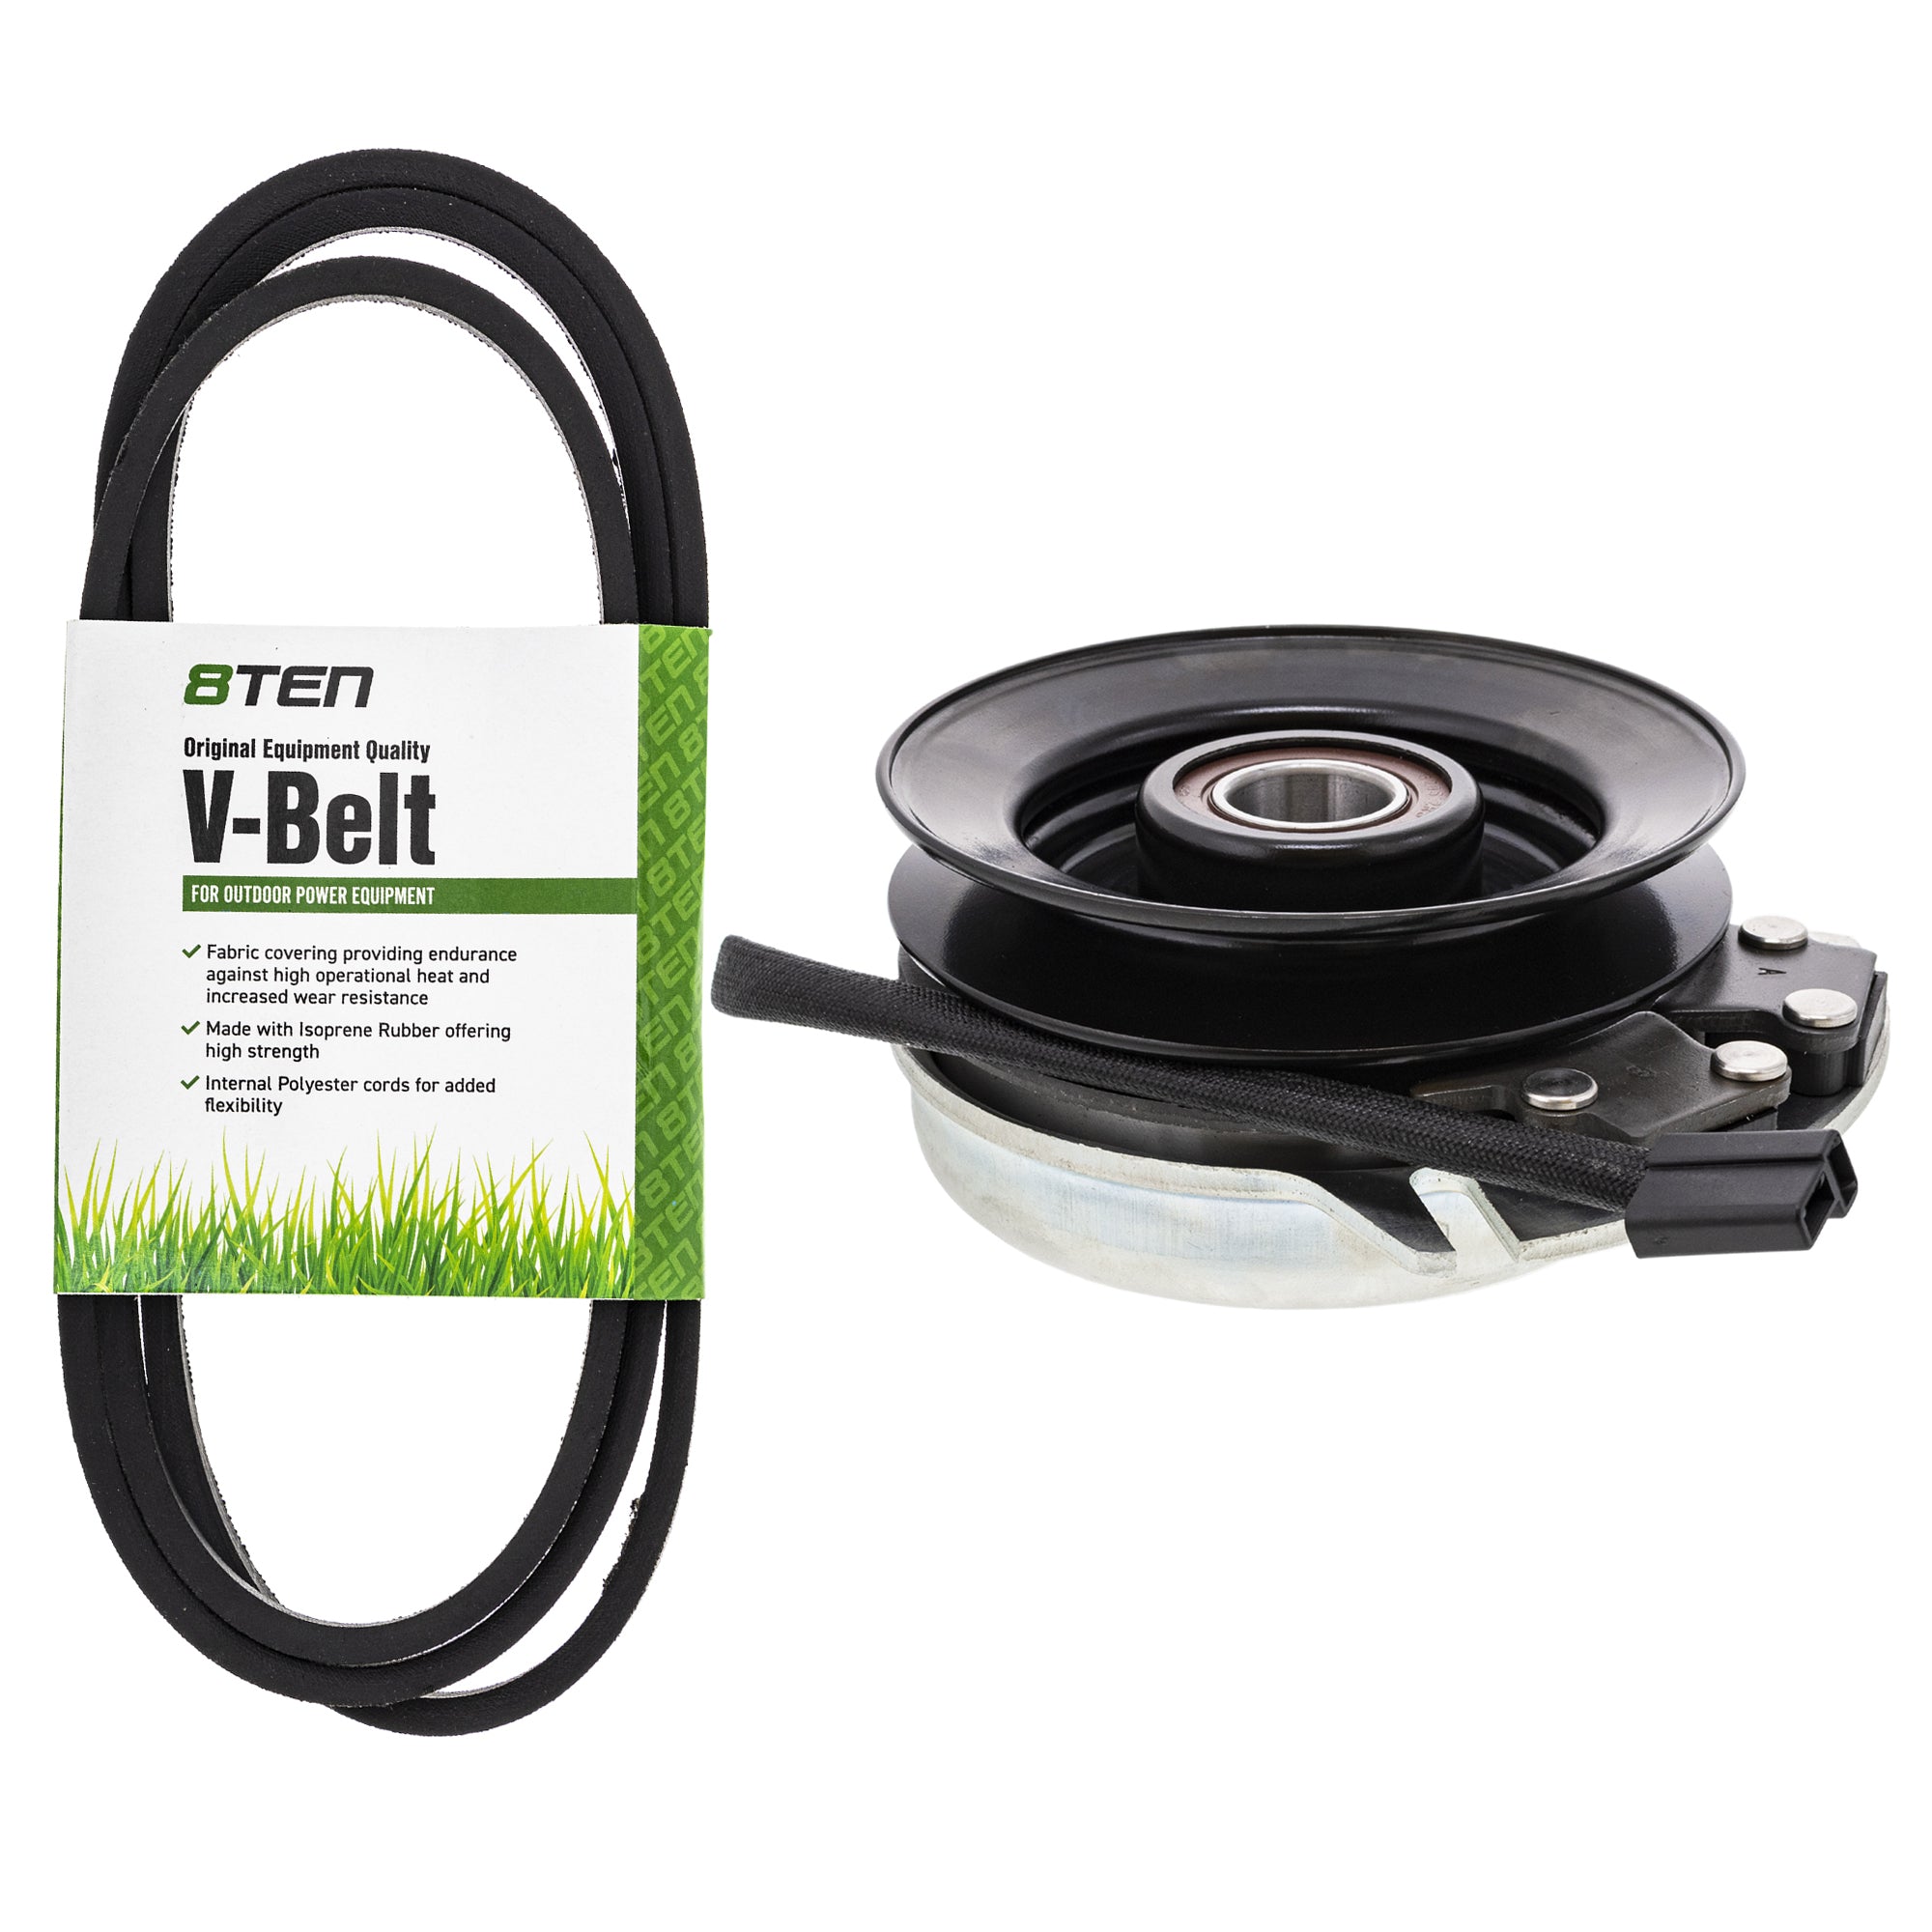 Electric PTO Clutch & Belt Kit for Xtreme Warner Stens Snapper Toro Landscape SIMPLICITY 8TEN MK1006329